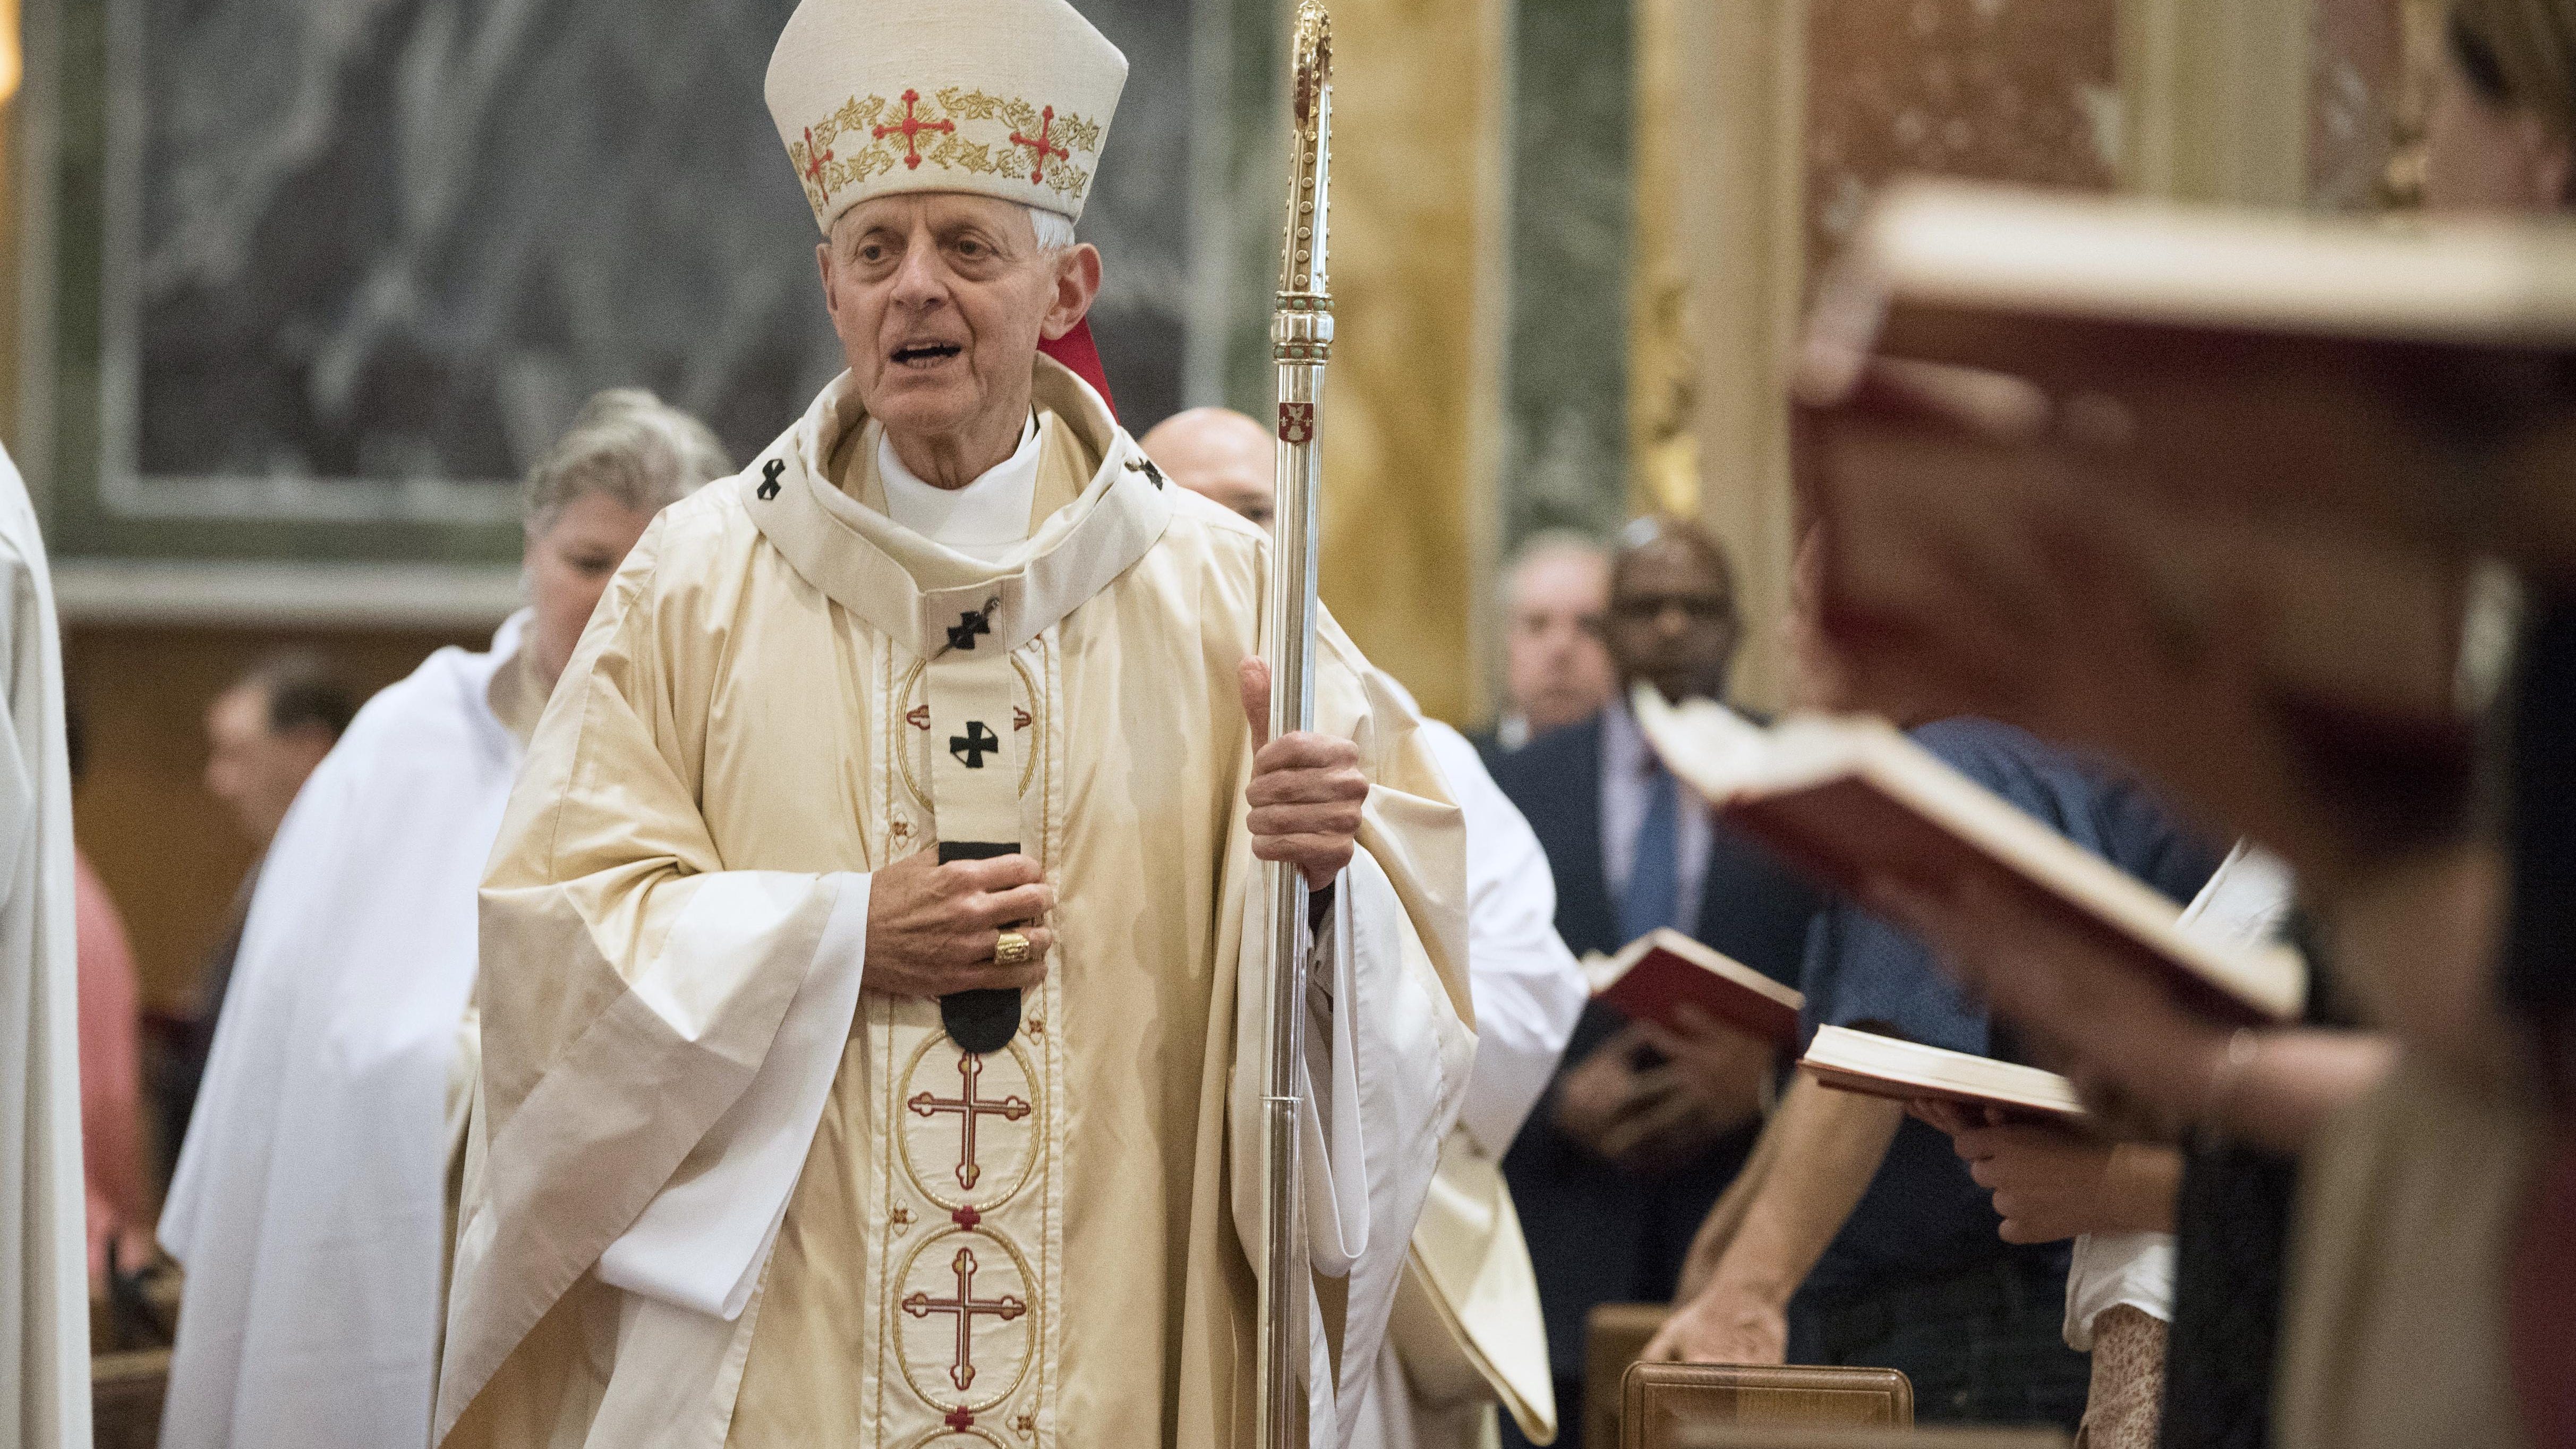 Cardinal Donald Wuerl, Archbishop of Washington, enters church for Mass at St. Mathews Cathedral, Aug. 15, 2018 in Washington.